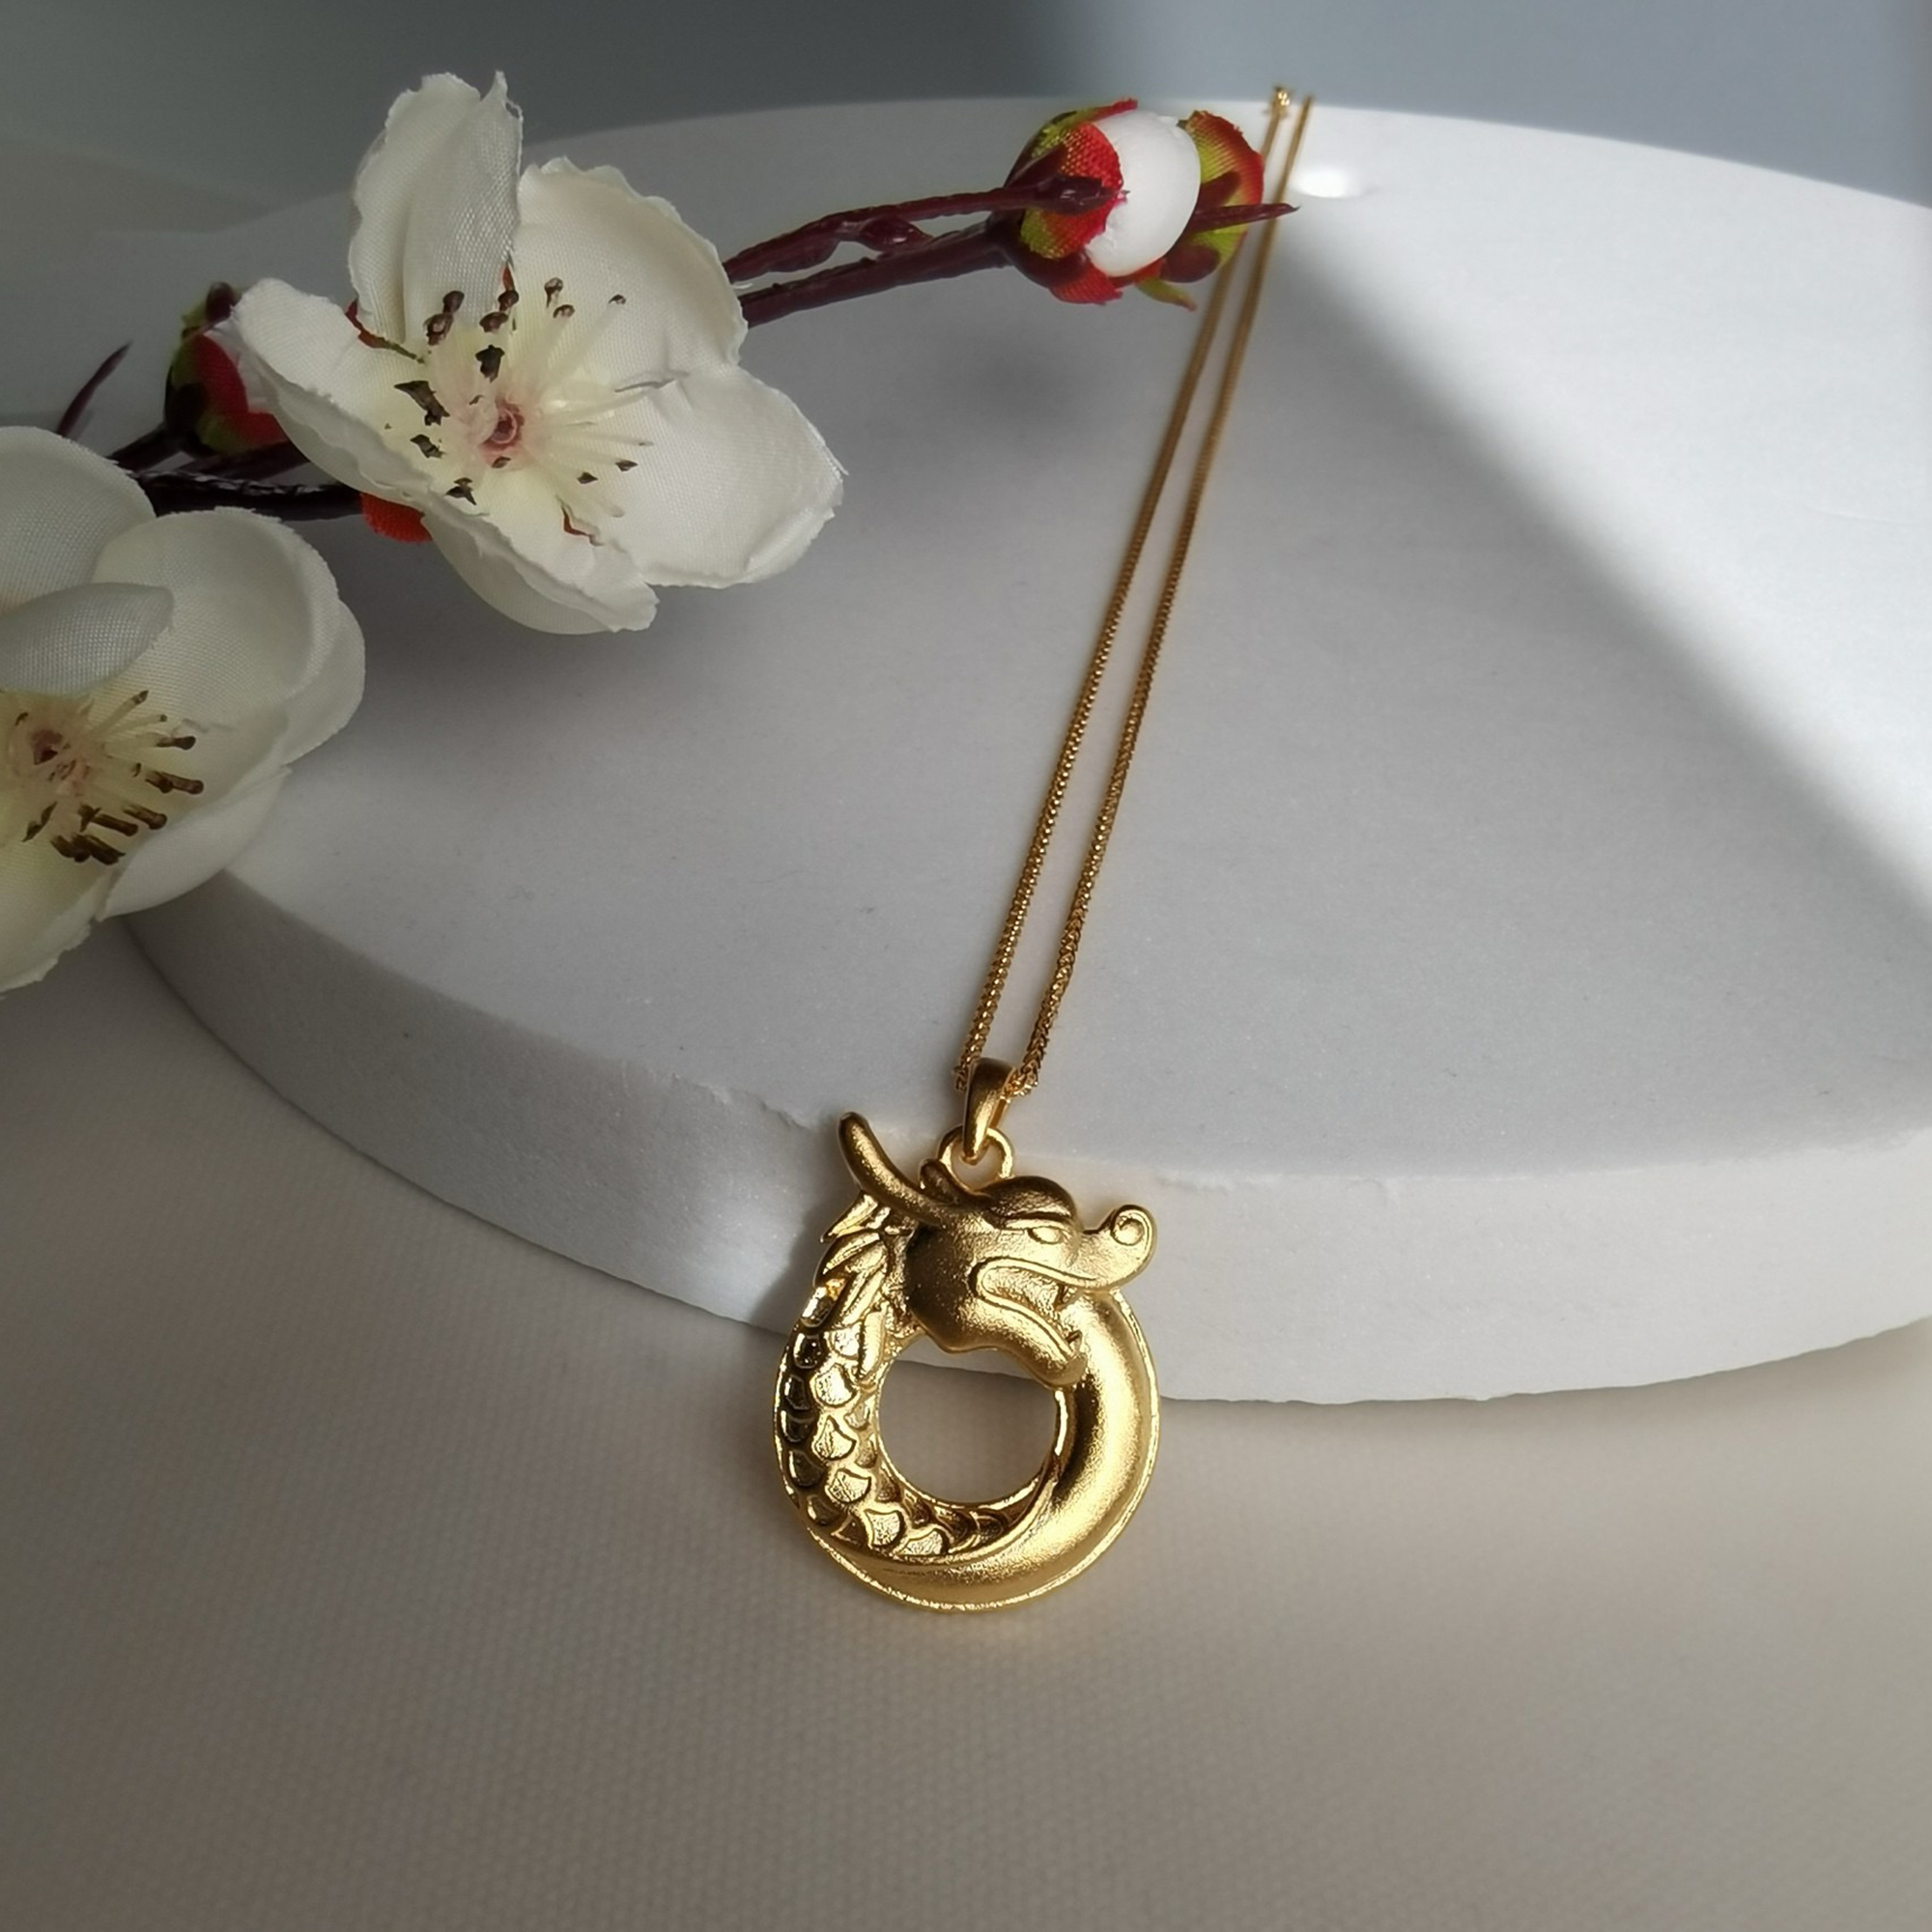 Alluvial Gold Ancient Method Vacuum Electroplating 24K Gold Hongfu Golden Dragon Necklace